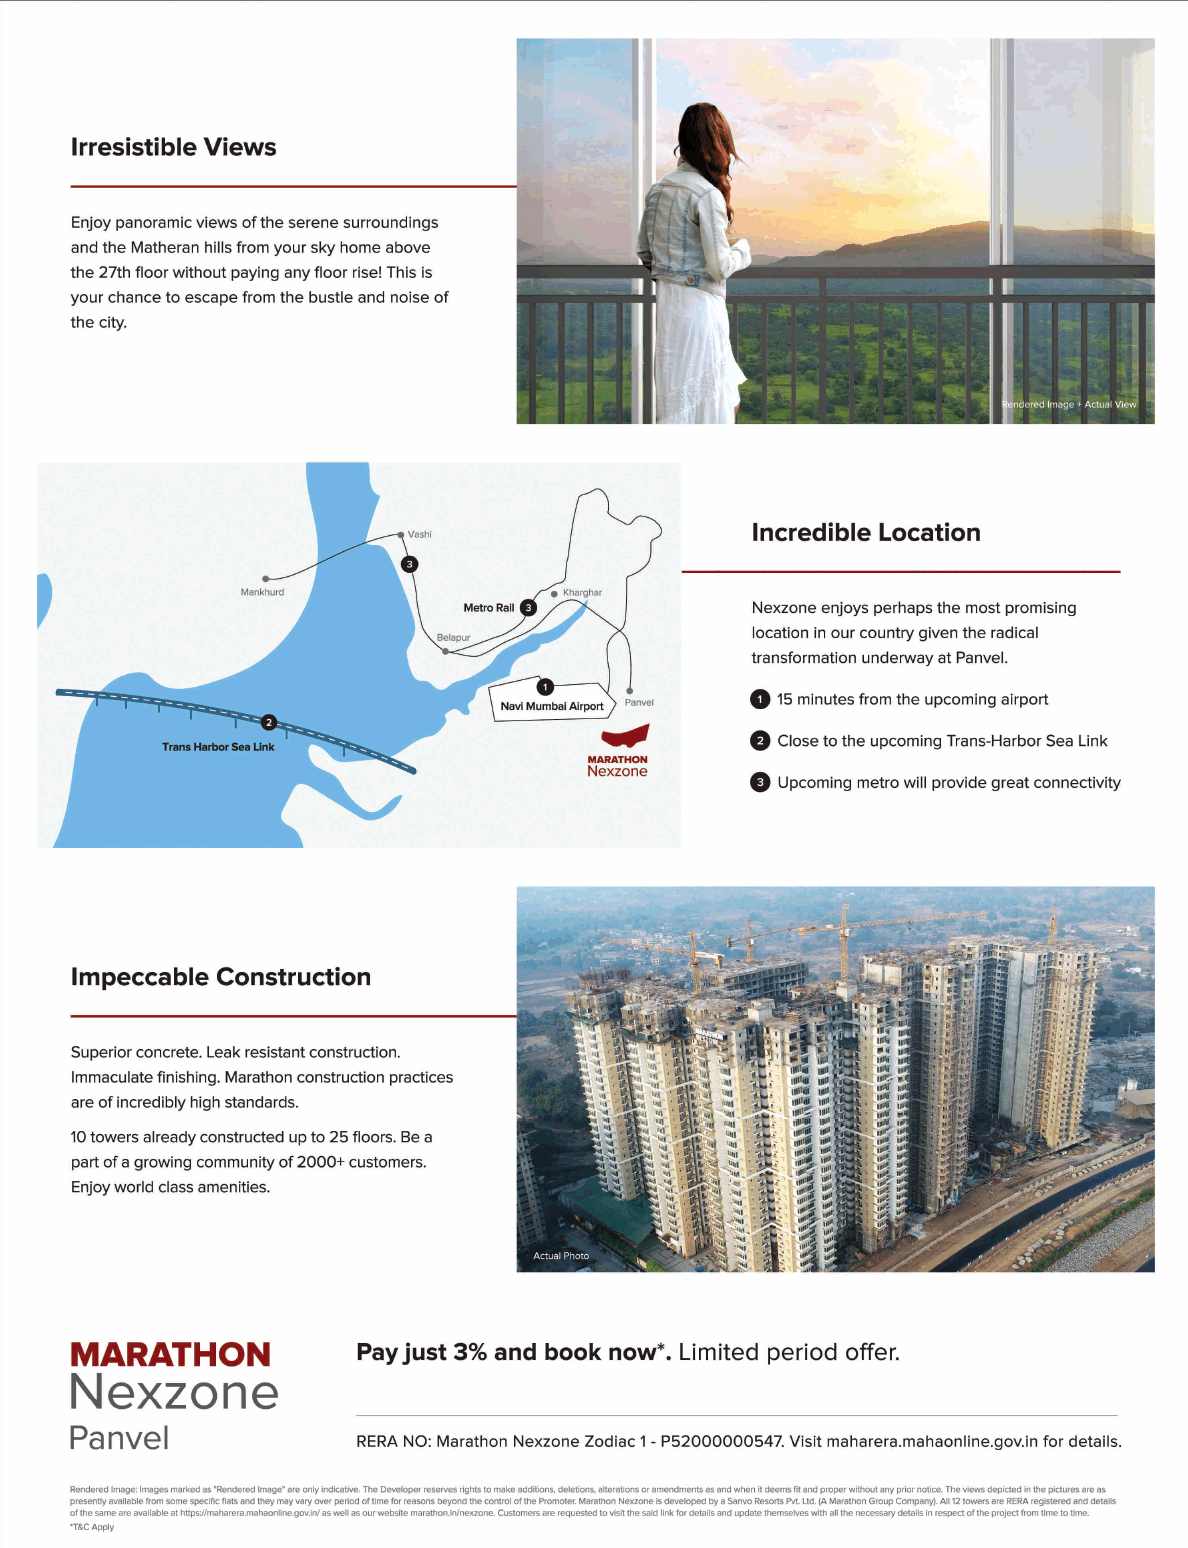 Pay just 3% and book your home at Marathon Nexzone in Navi Mumbai